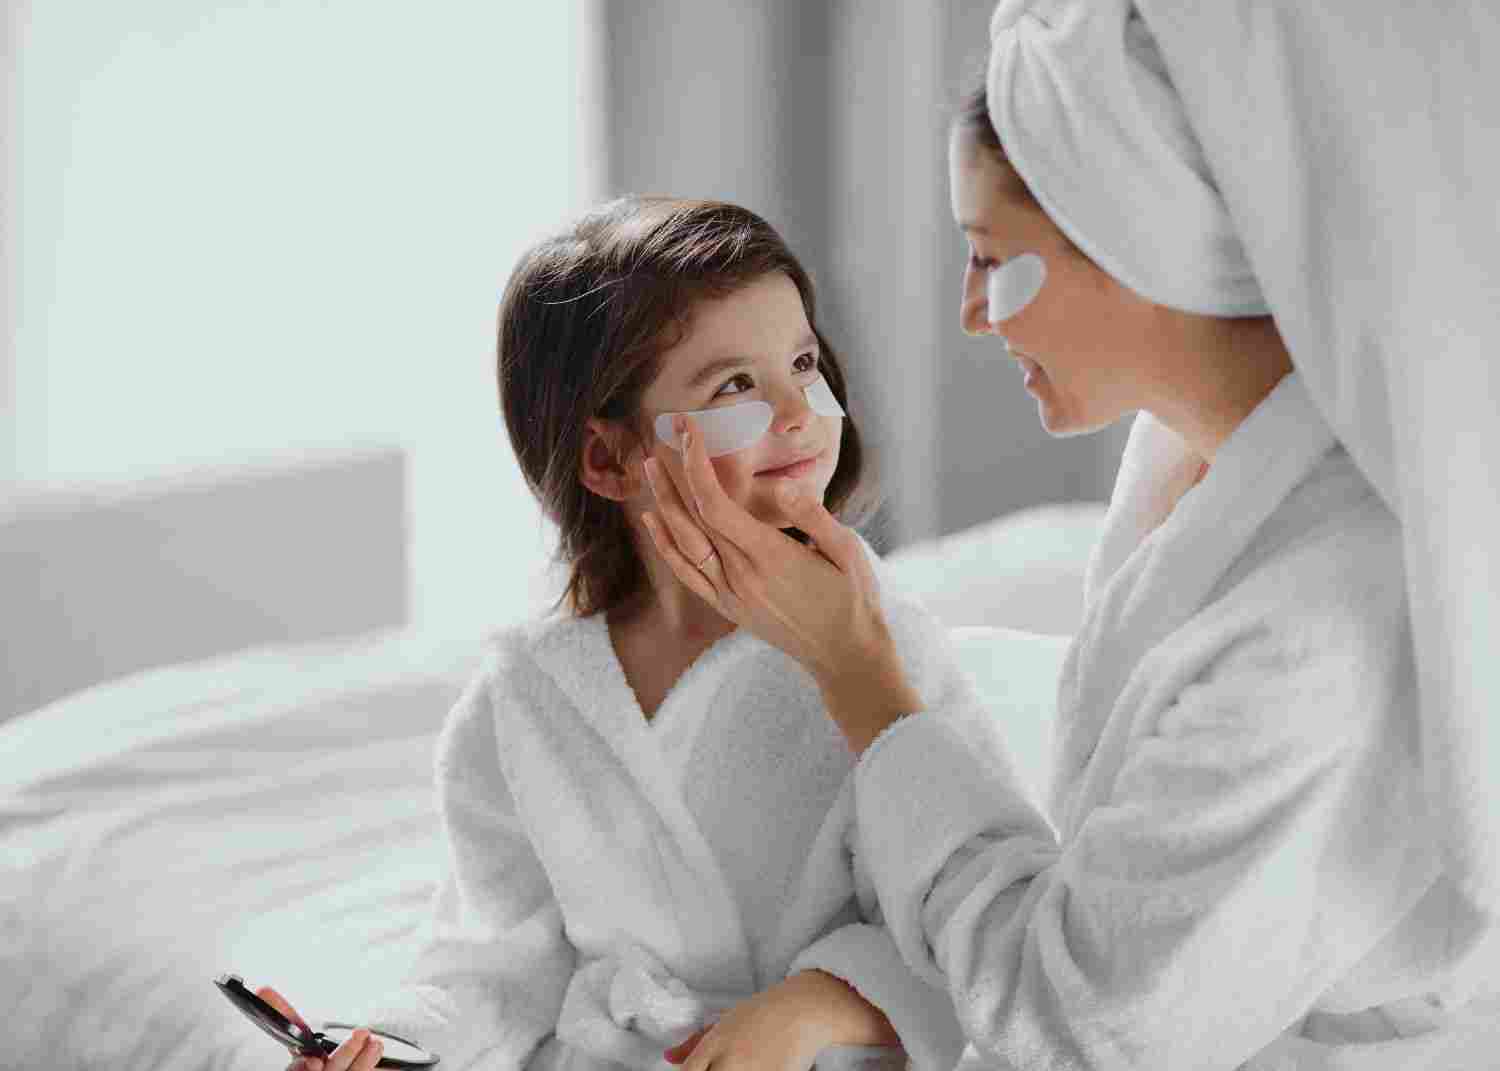 5 Ways To Make Skincare Fun for Children